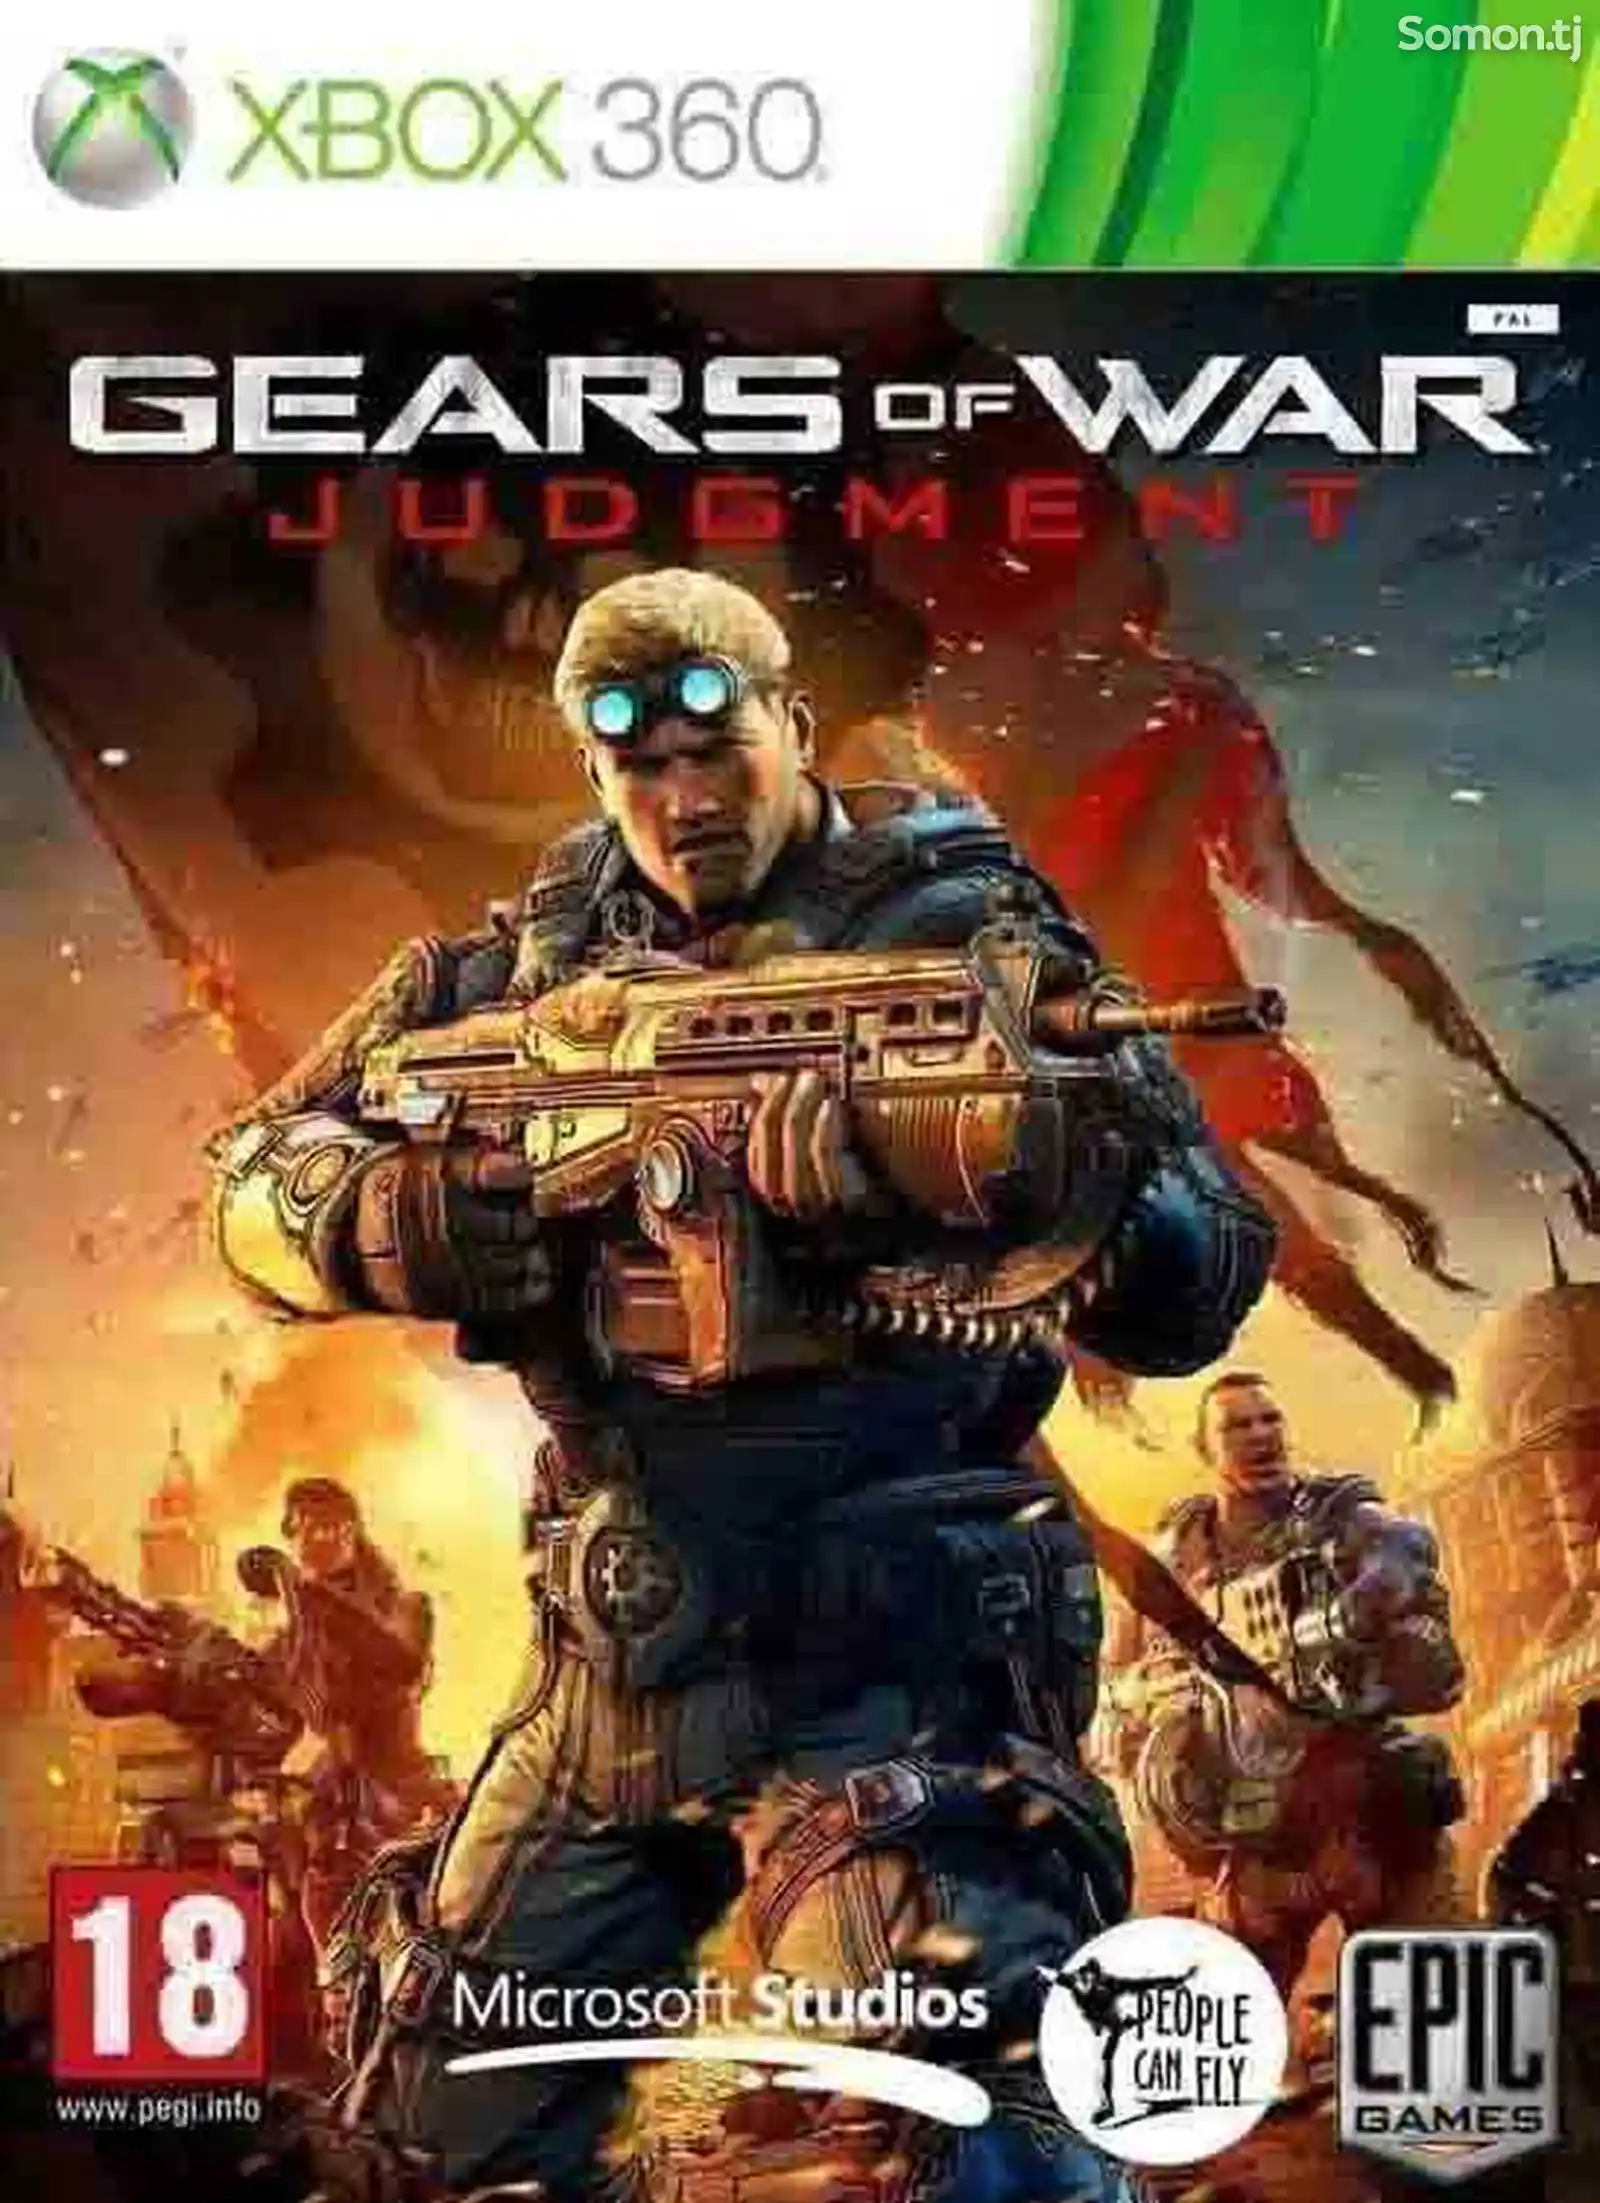 Игра Gear of war jubgment для прошитых Xbox 360